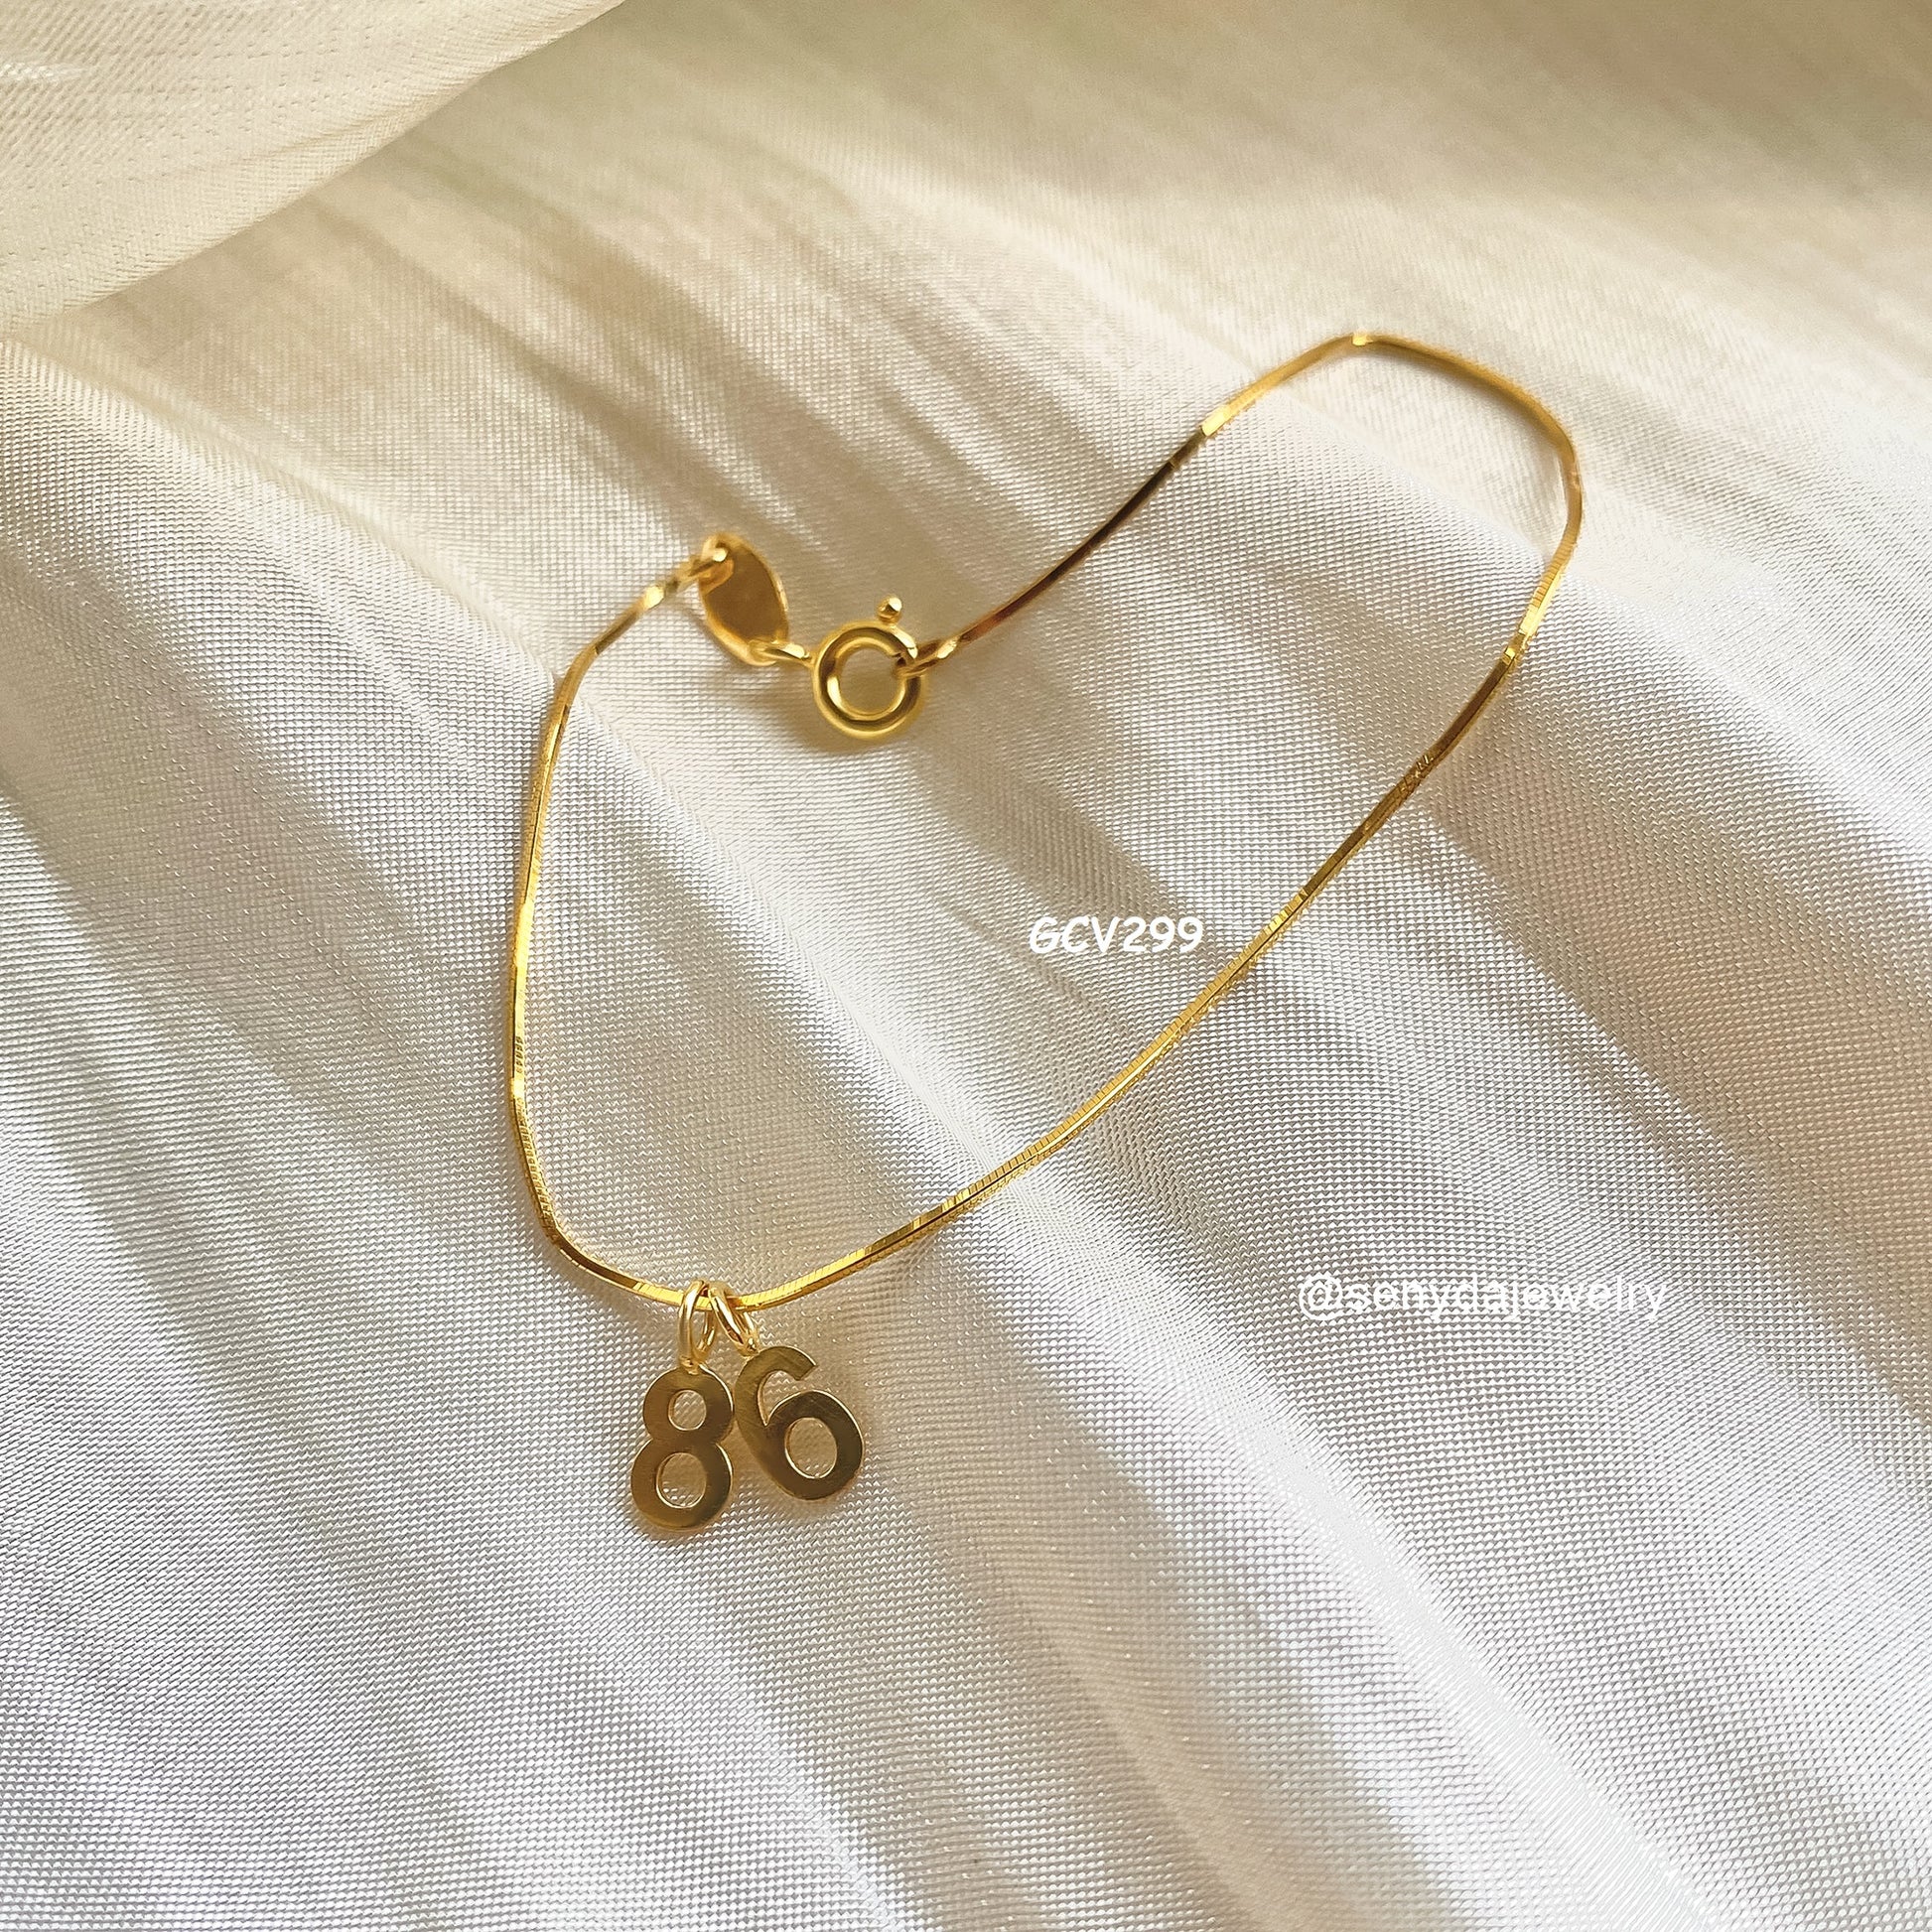 Senyda 10K Gold Personalized Number Charm Bracelet